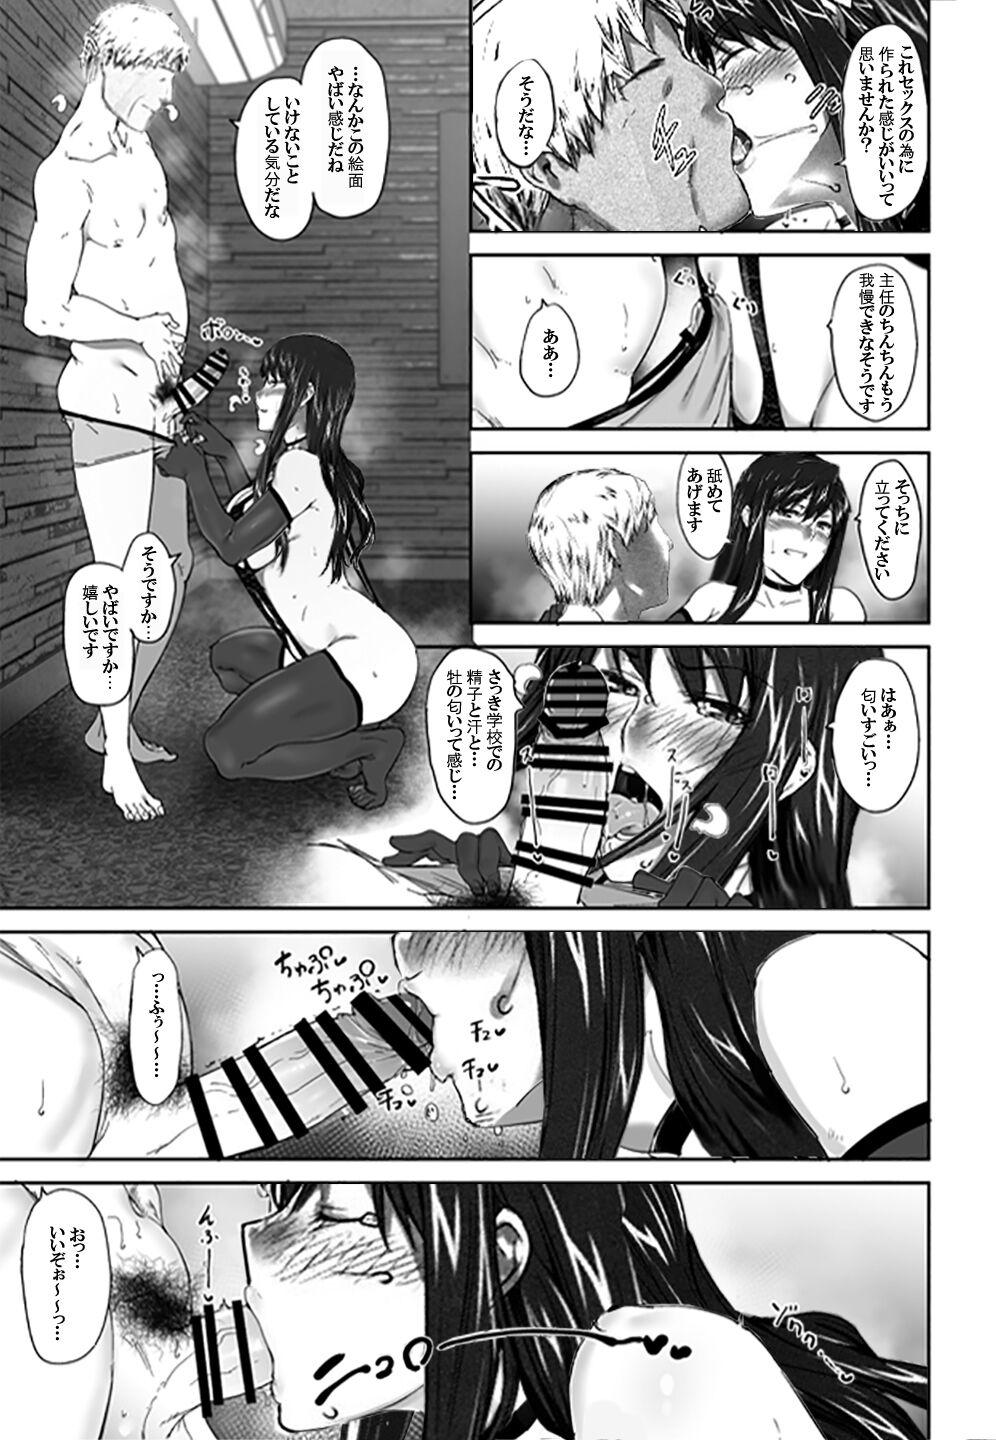 Sakiko-san in delusion Vol.10 ~Sakiko-san's circumstance of friends with benefits~ (collage) 28